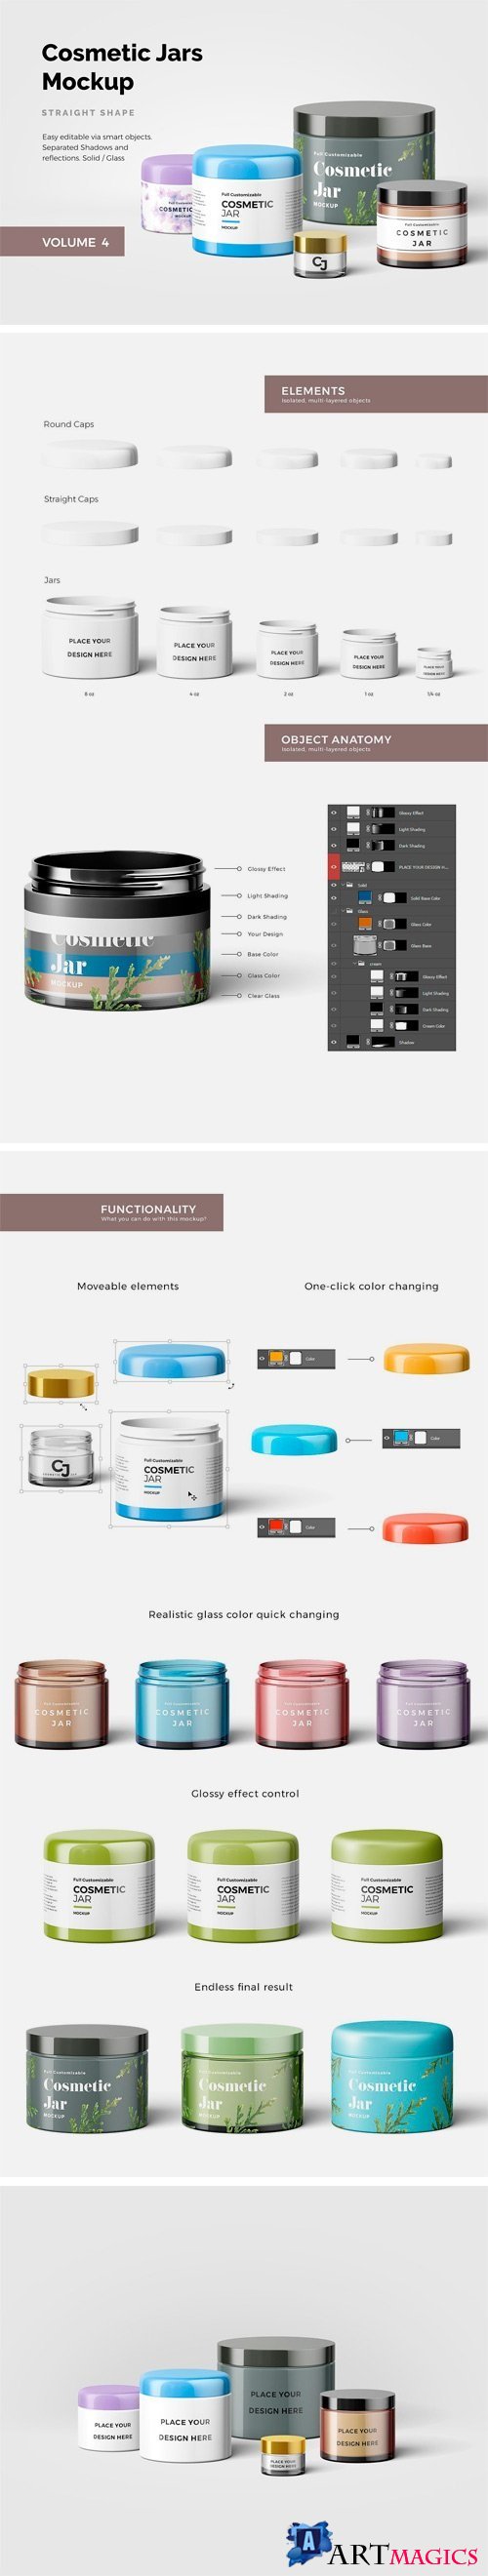 Cosmetic Jars Mockup - 2200731